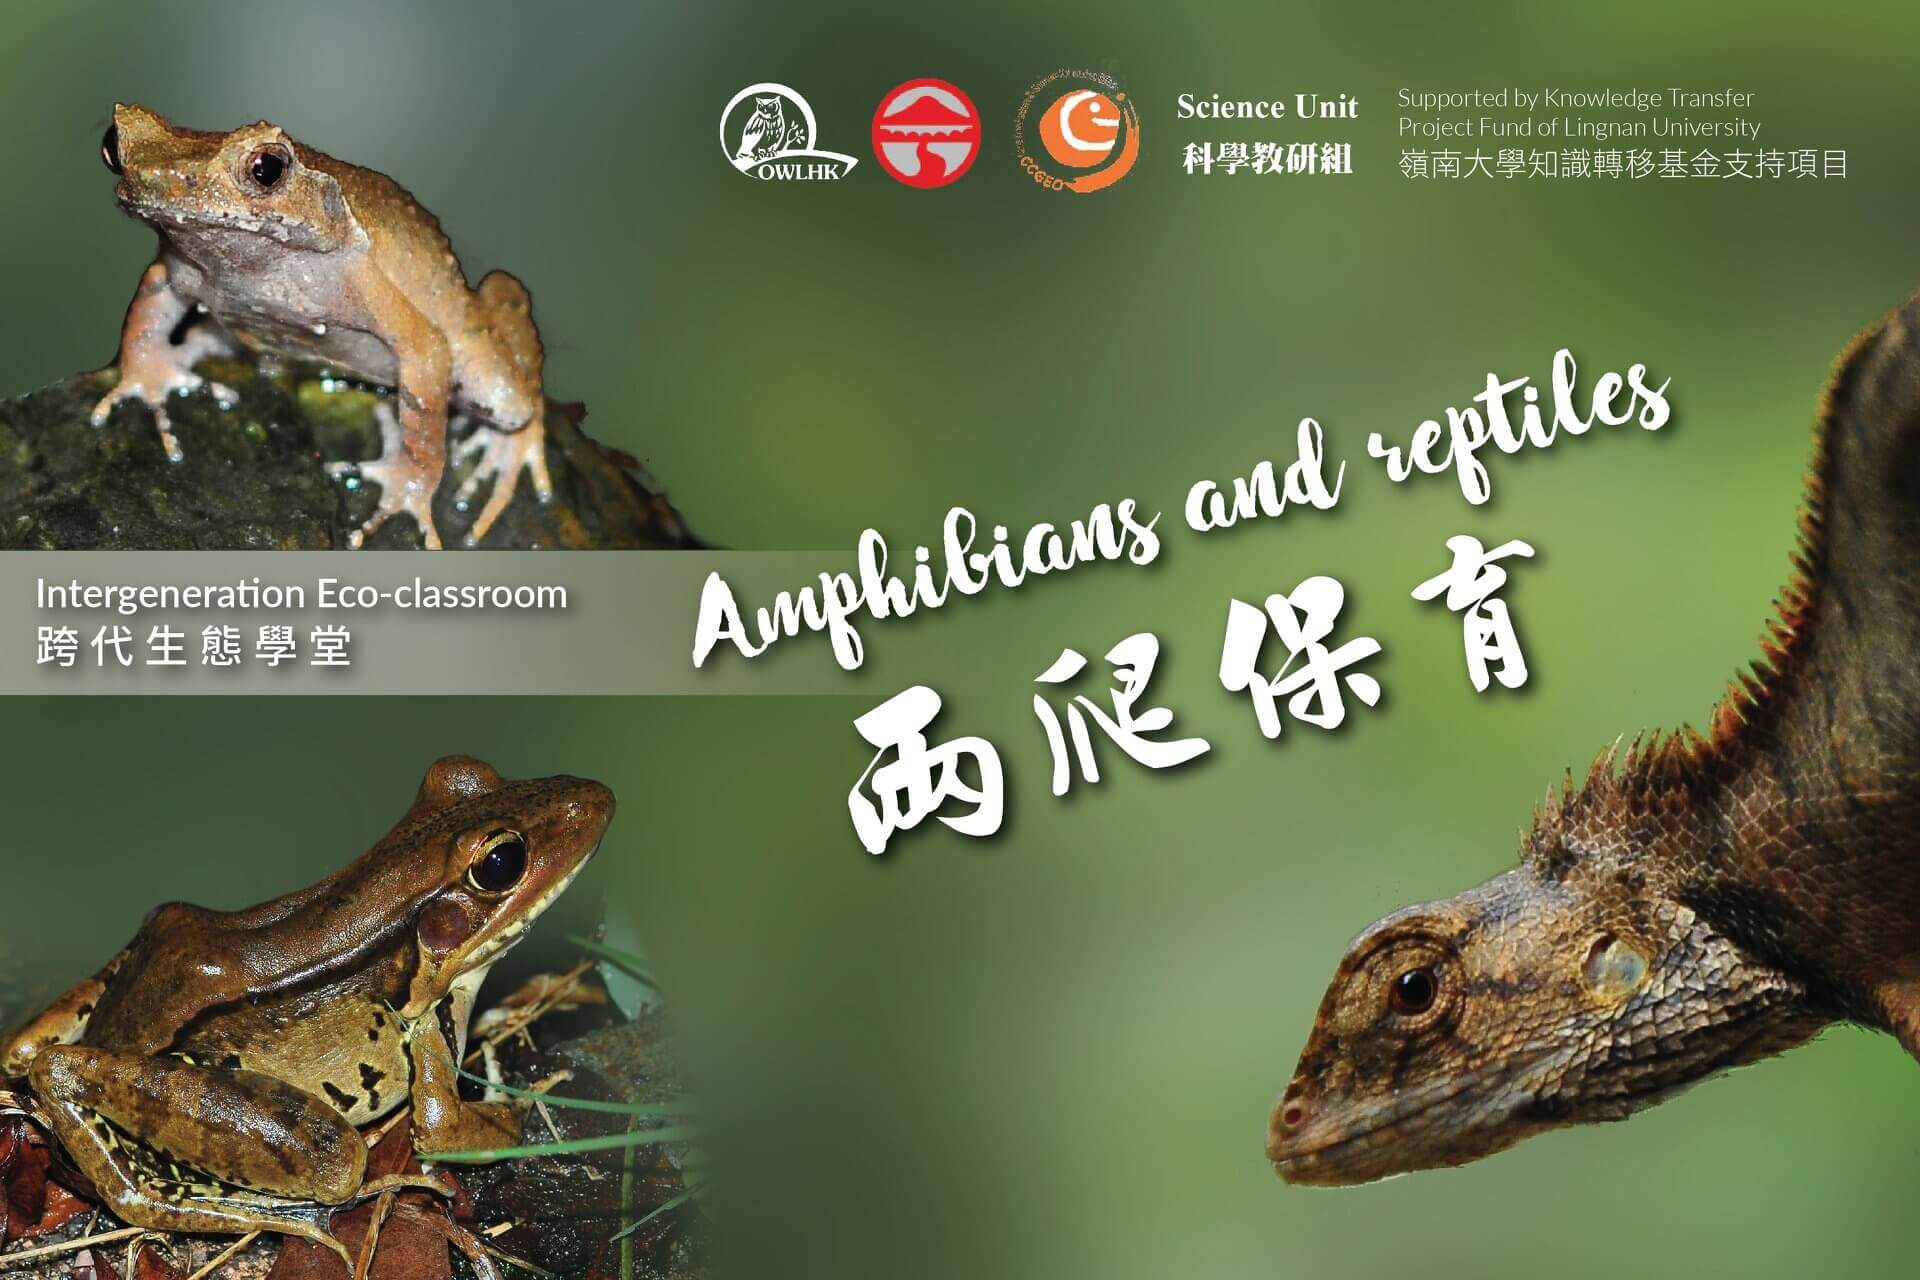 Intergeneration Eco-classroom - Amphibians and Reptiles